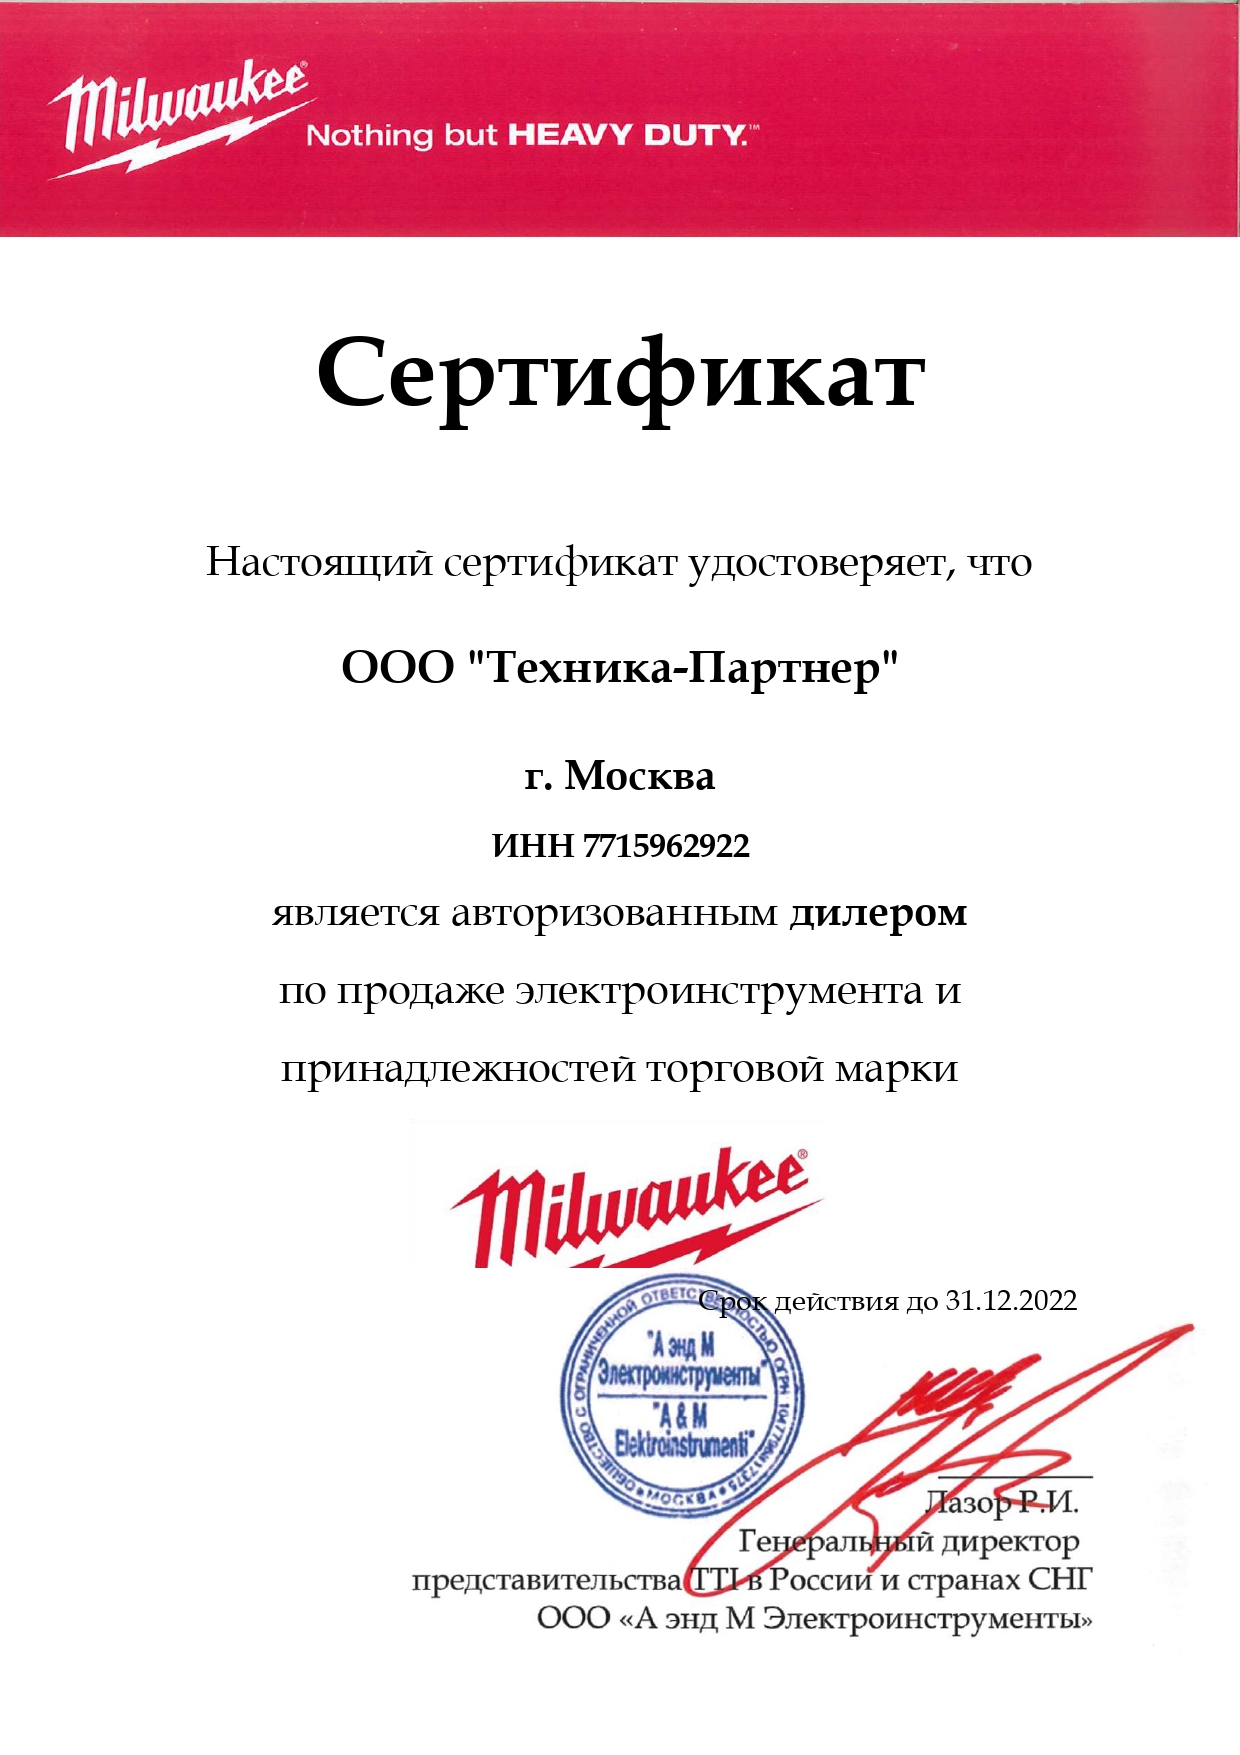 Сертификат Техника-Партнер